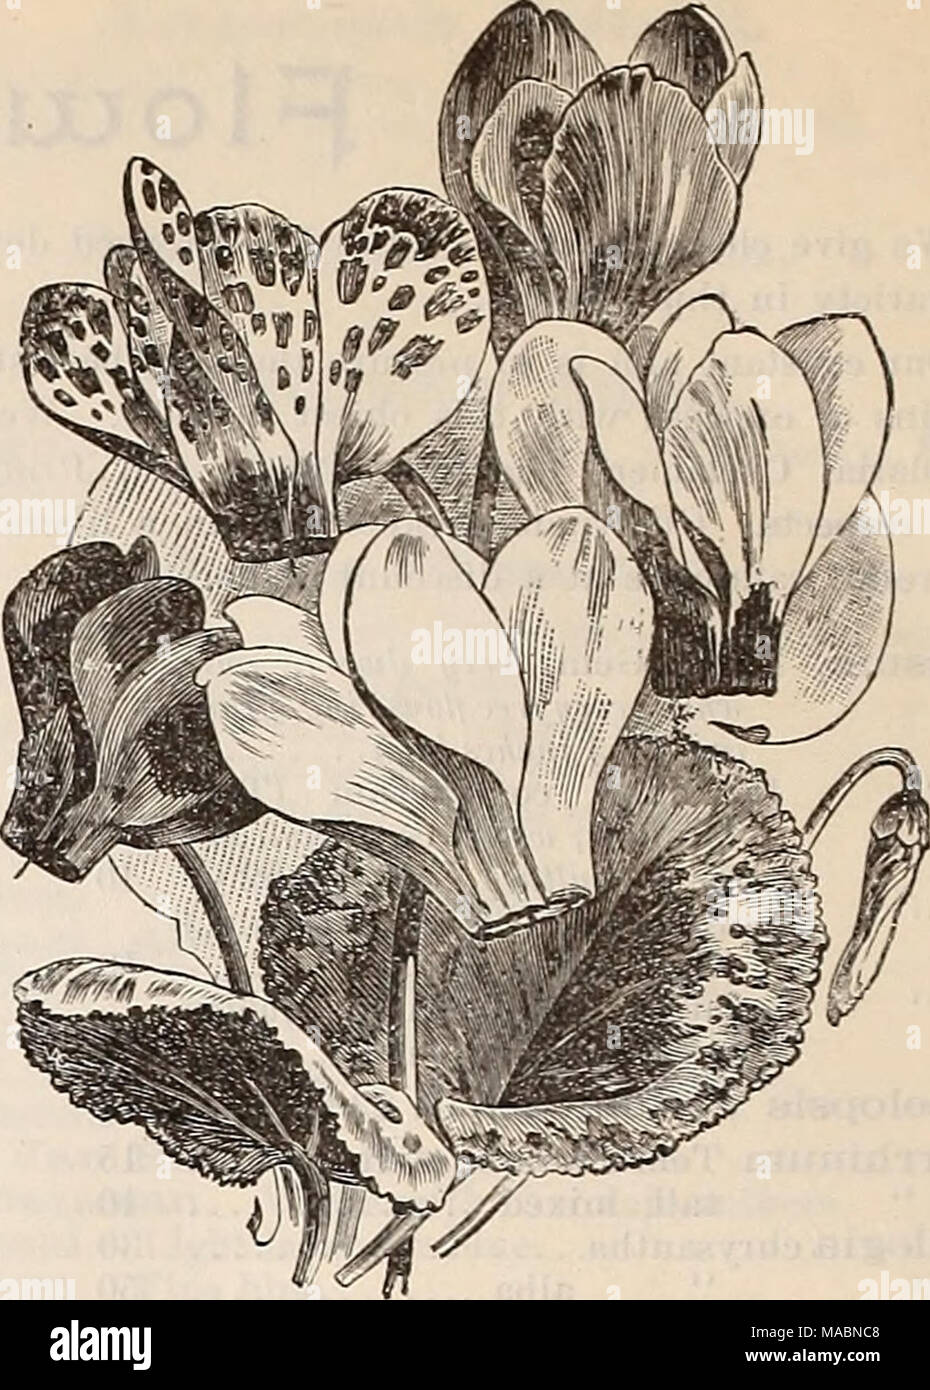 . Dreer's quarterly wholesale price list of bulbs, plants,seeds, &amp;c. : autumn edition, September 1896 December . MEL. ¥ m . W/ Cyclamen Persicum Giuanteum. Trade pkt. Peroz. Dianthus Plumarius (Pheasants' Eye Pink), single mixed $ 10 $ 15 &quot; &quot; Double mixed 50 3 00 &quot; &quot; Semperflorens ... 1 00 Dracaena Indivisa, splendid vase plant 15 50 &quot; &quot; Lineata 25 1 00 &quot; Australis 40 2 00 Geranium, Apple scented, new crop just received. Per 100 seeds, 25c; per 1000 seeds, $2.00. Stock Photo